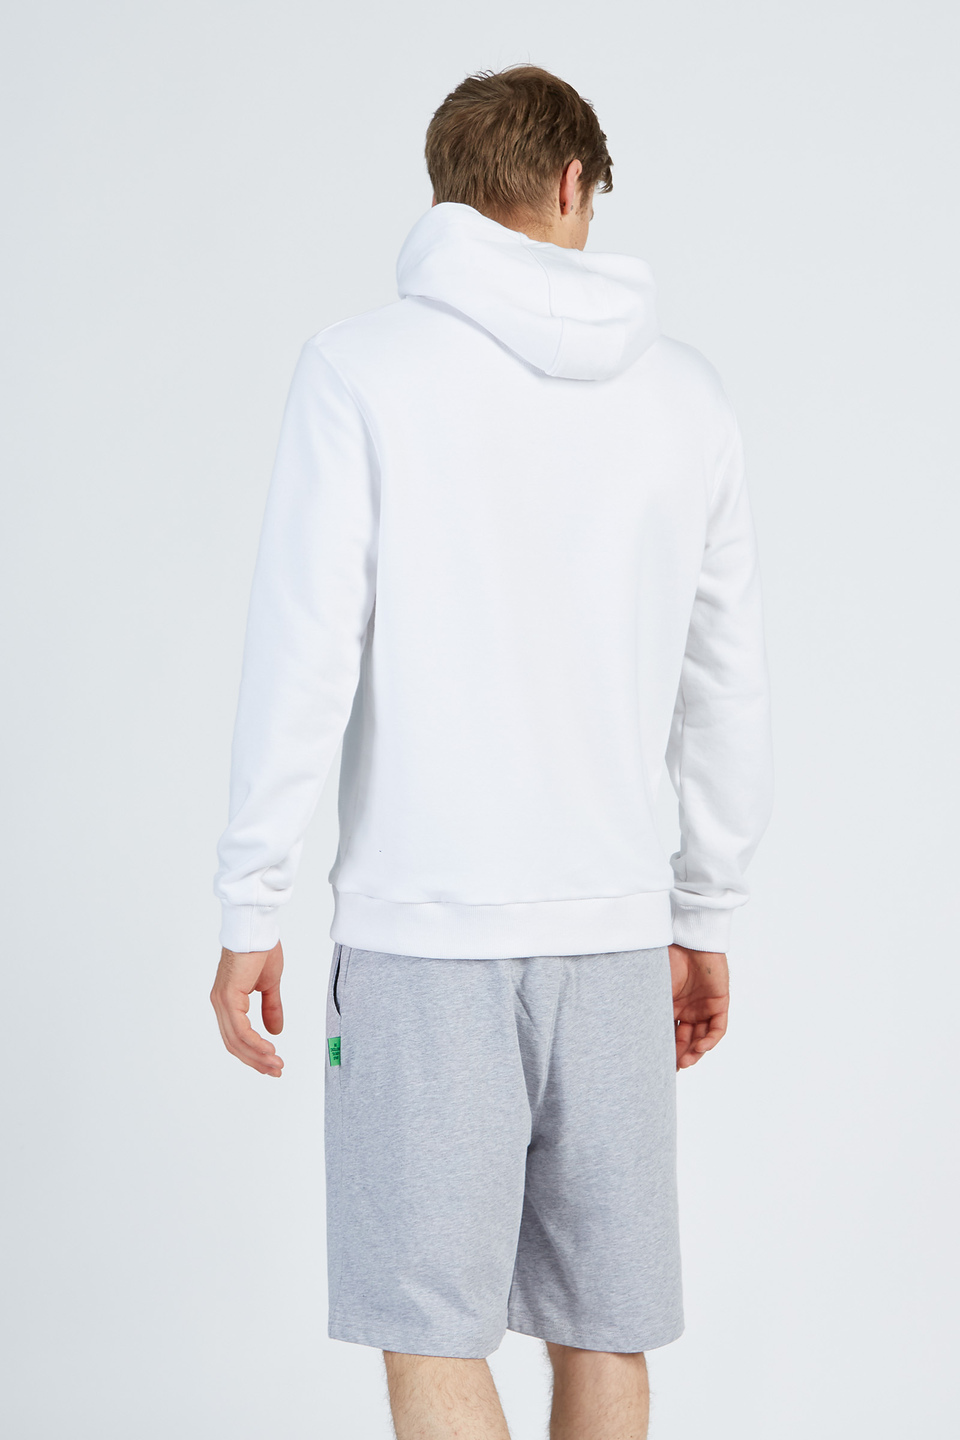 Men's cotton hoodie with a front pocket - La Martina - Official Online Shop